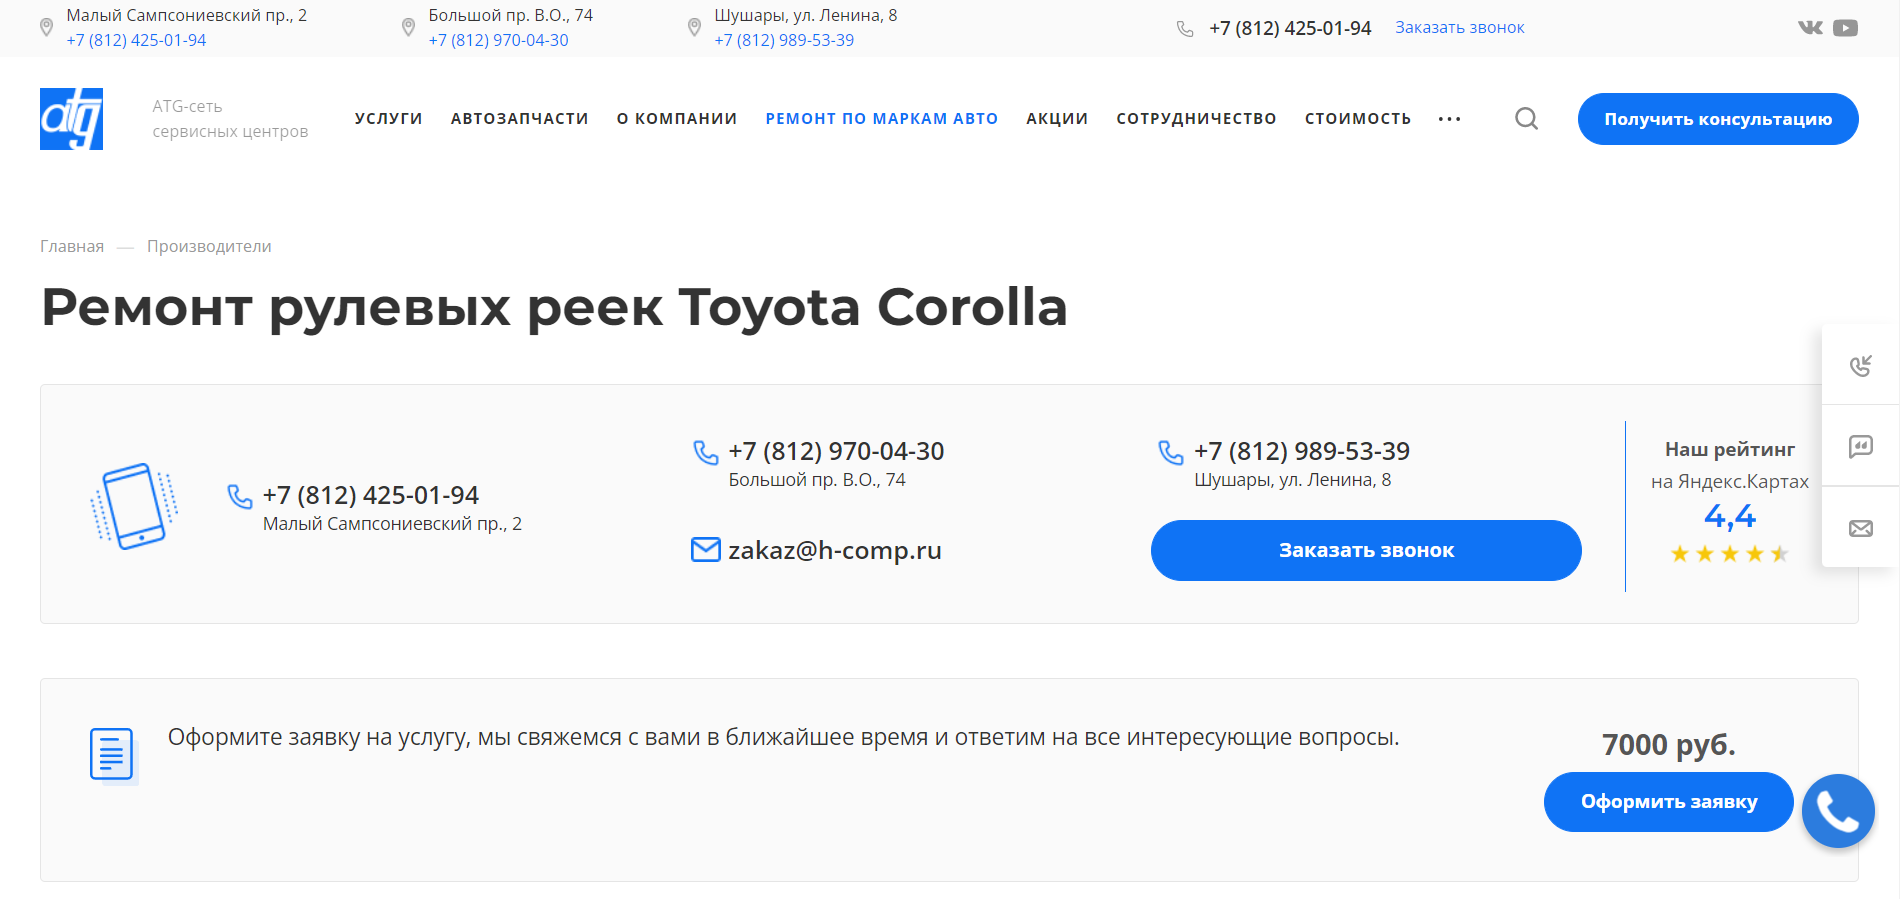 Ремонт рулевых реек Toyota Corolla